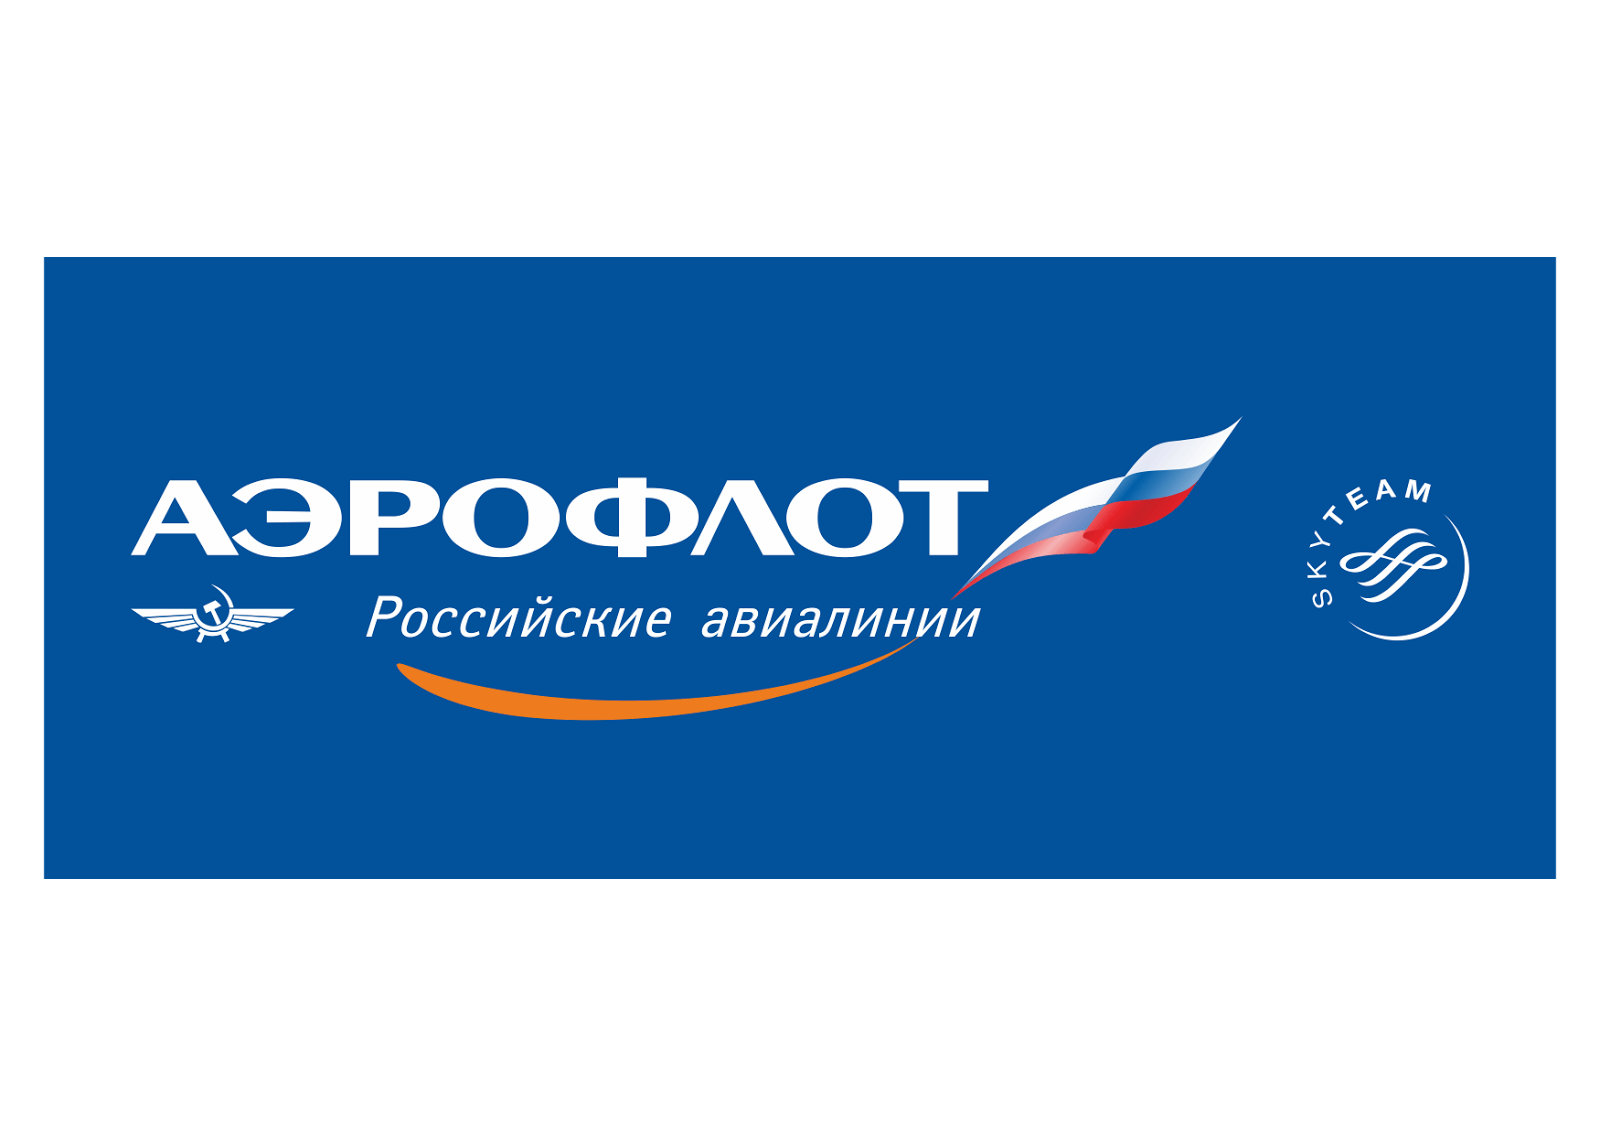 Aeroflot Logo - Aeroflot Russian Airlines Logo Vector Format Cdr Ai Eps Logo Image ...